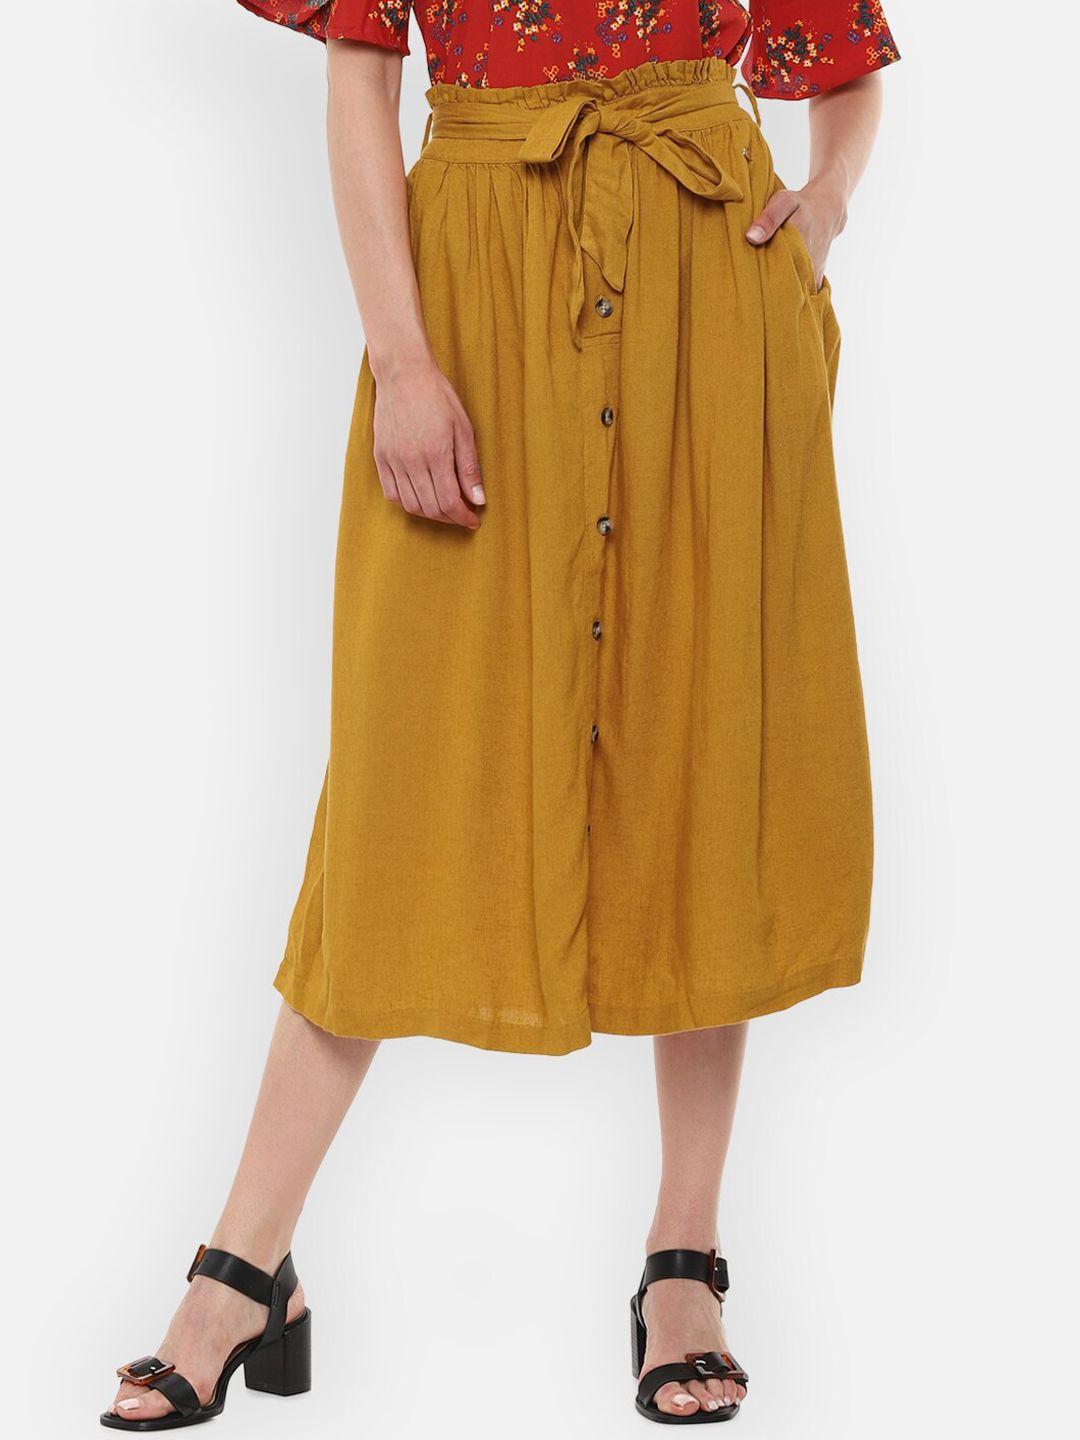 van-heusen-woman-mustard-yellow-solid-knee-length-a-line-skirt